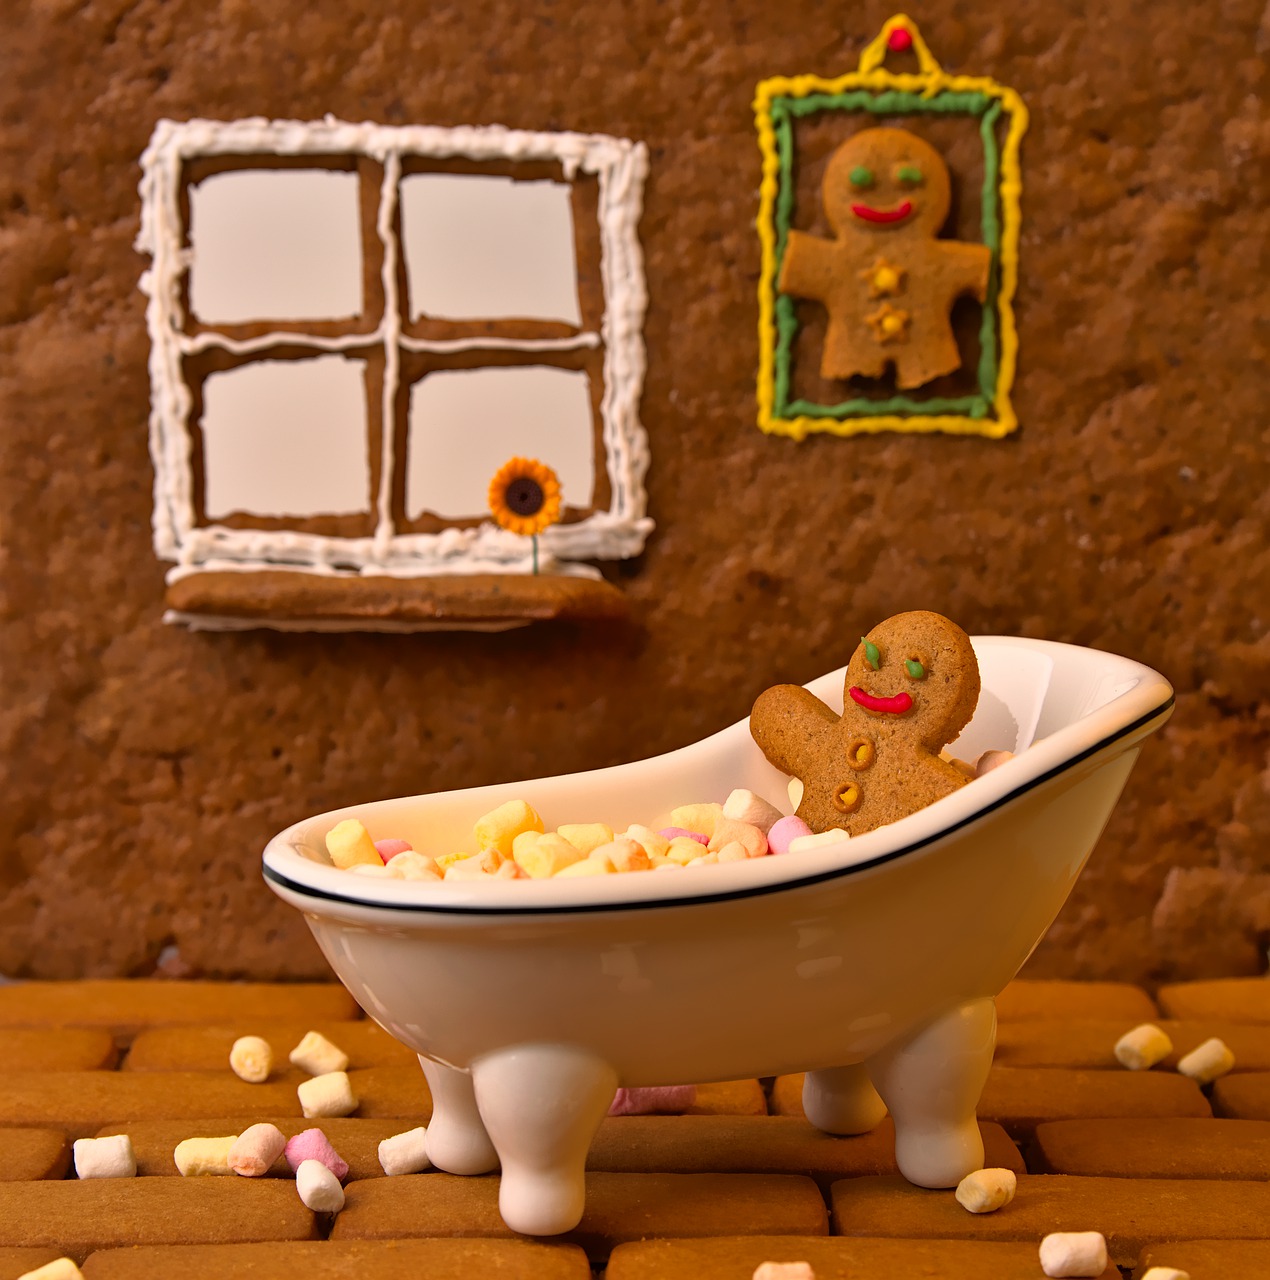 Gingerbread Man Gingerbread House  - lovini / Pixabay